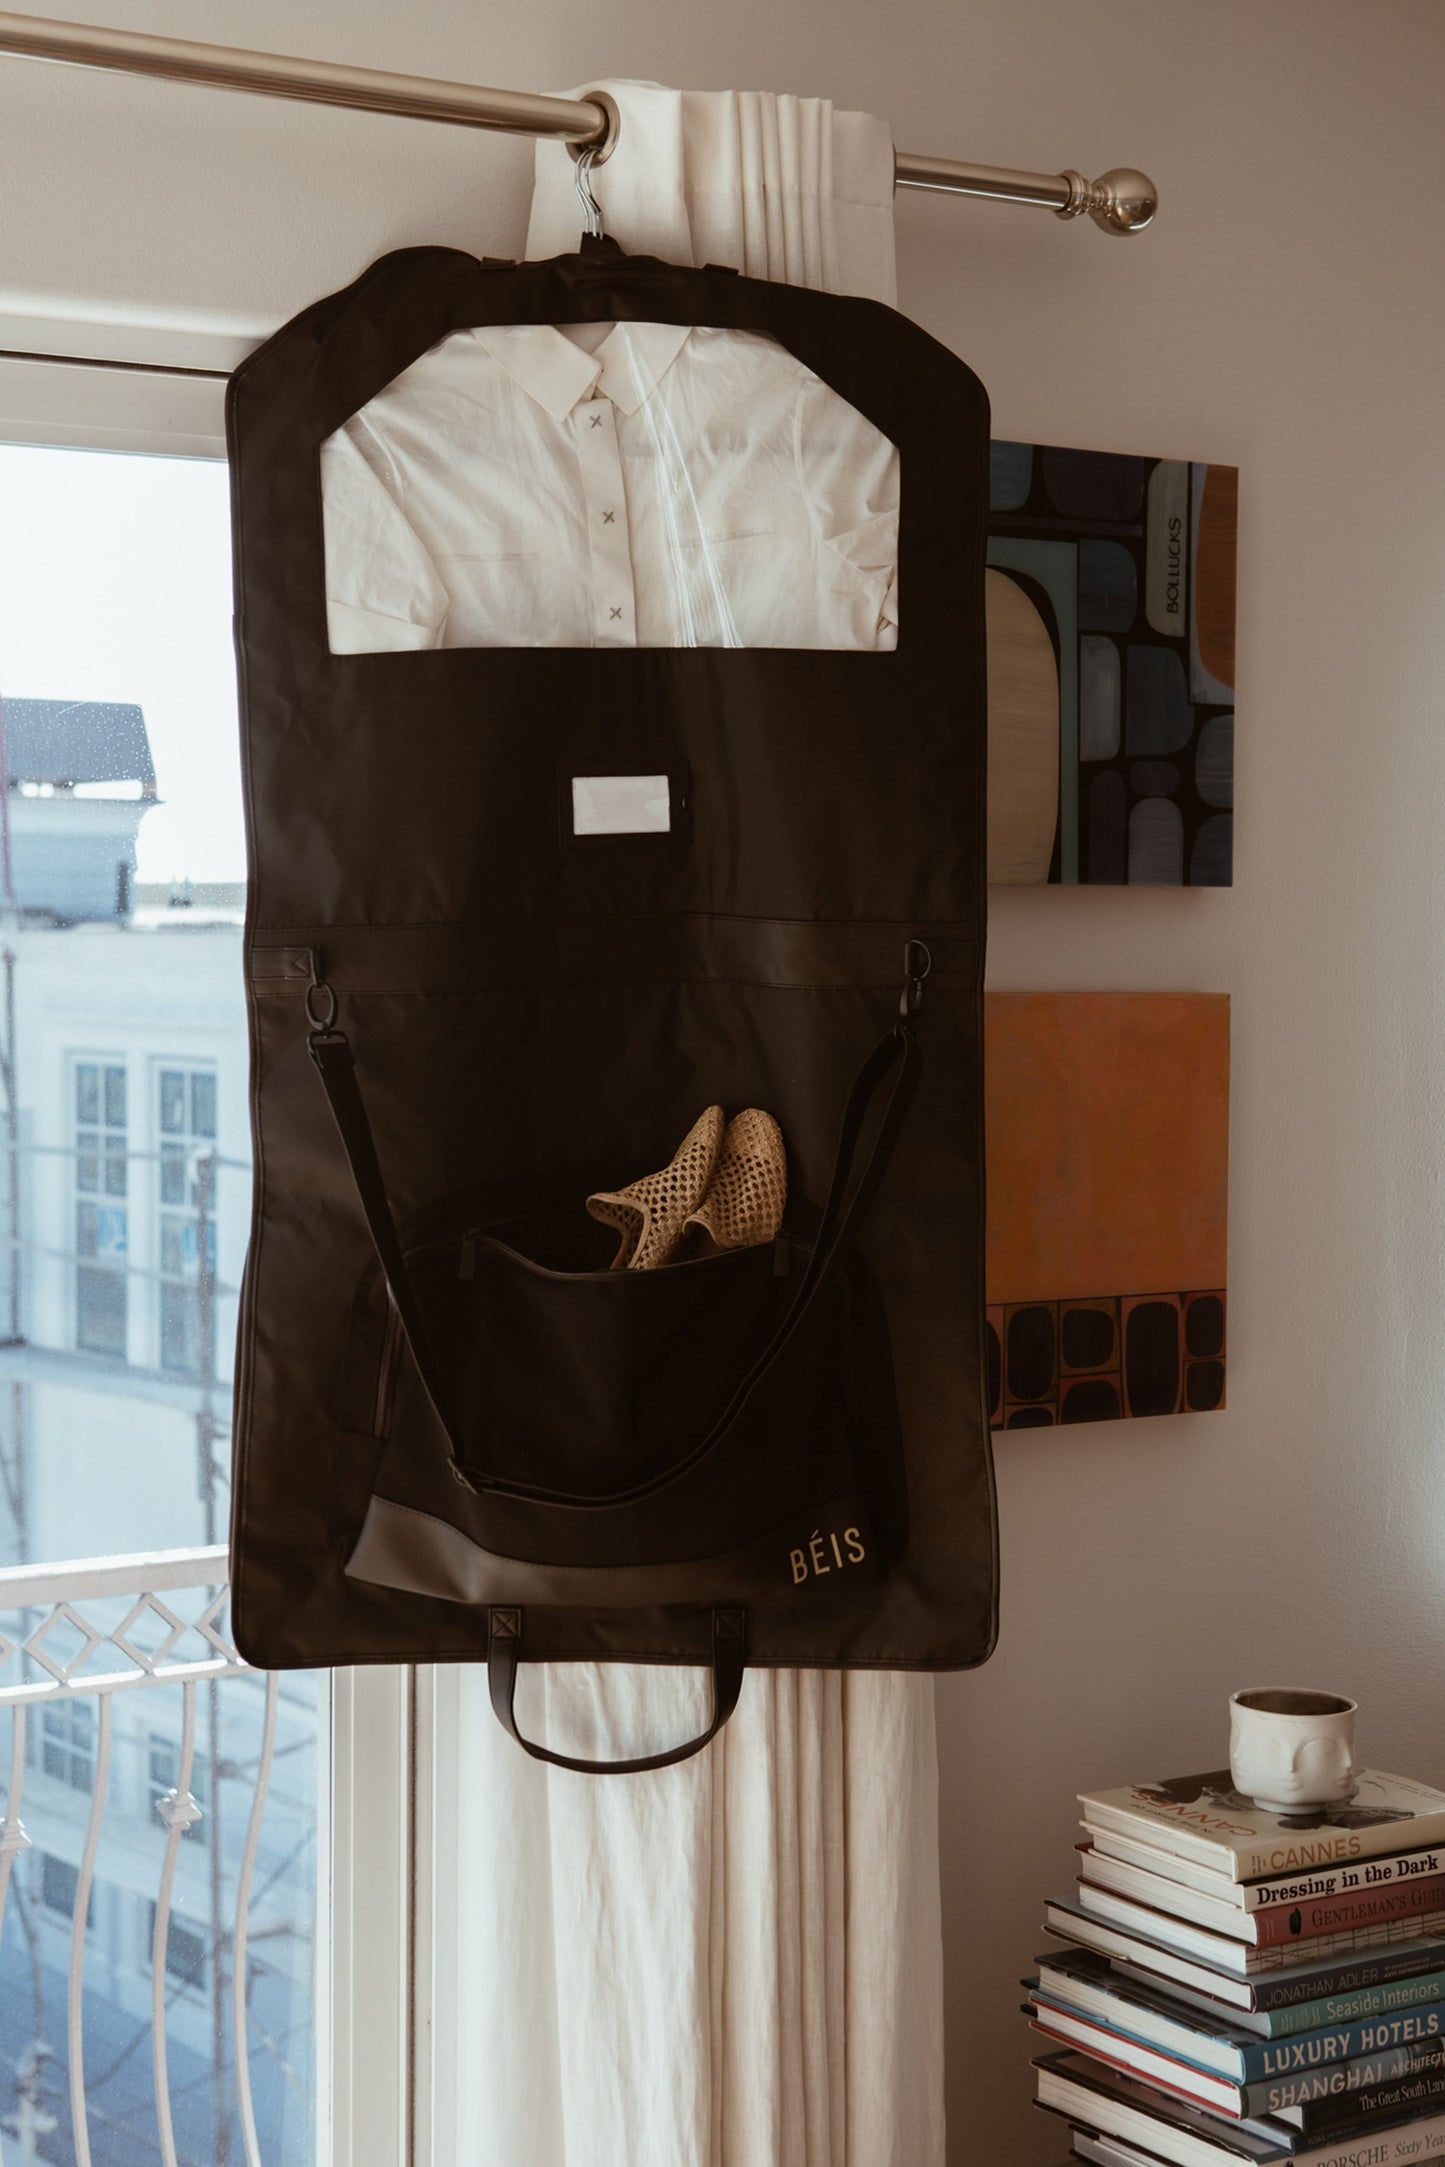 Travel Garment Bag Black Hanging on Curtain